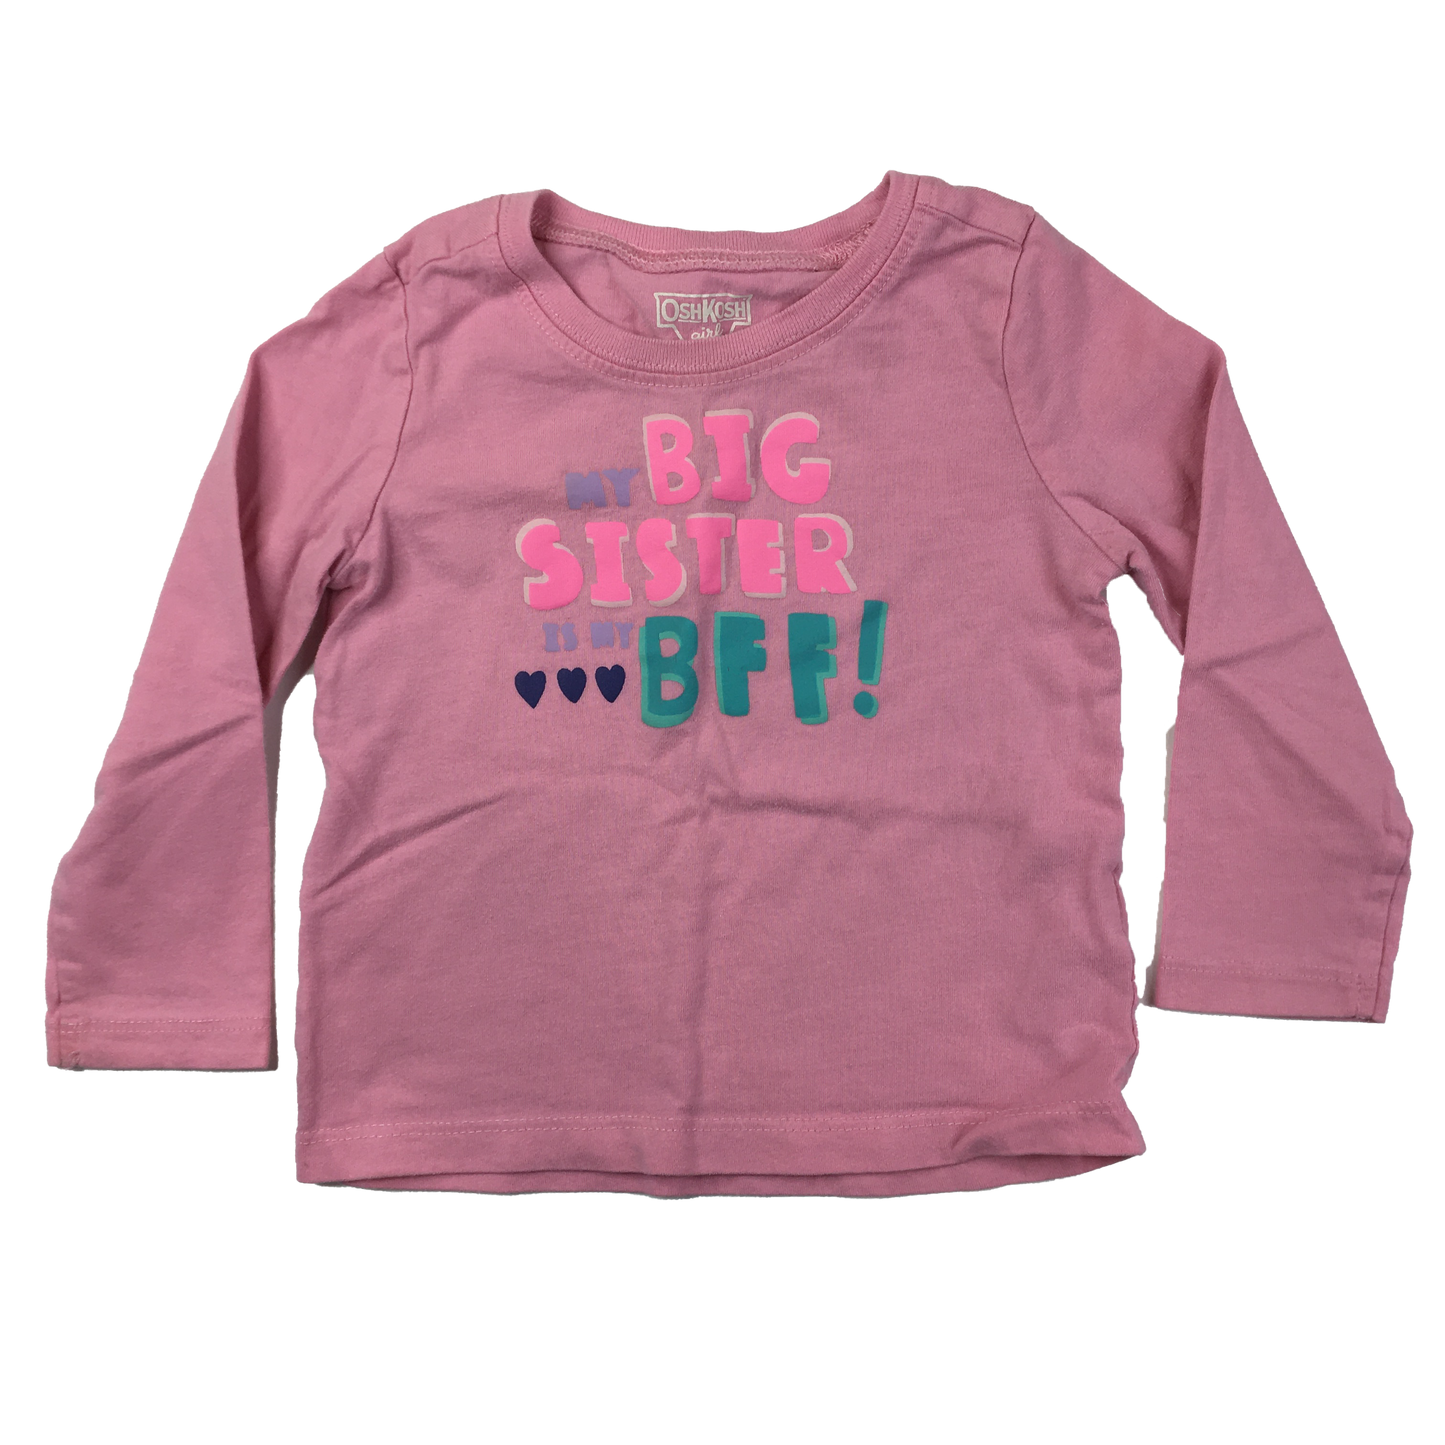 OshKosh Pink Long Sleeve Shirt "My Big Sister Is My BFF" 18M